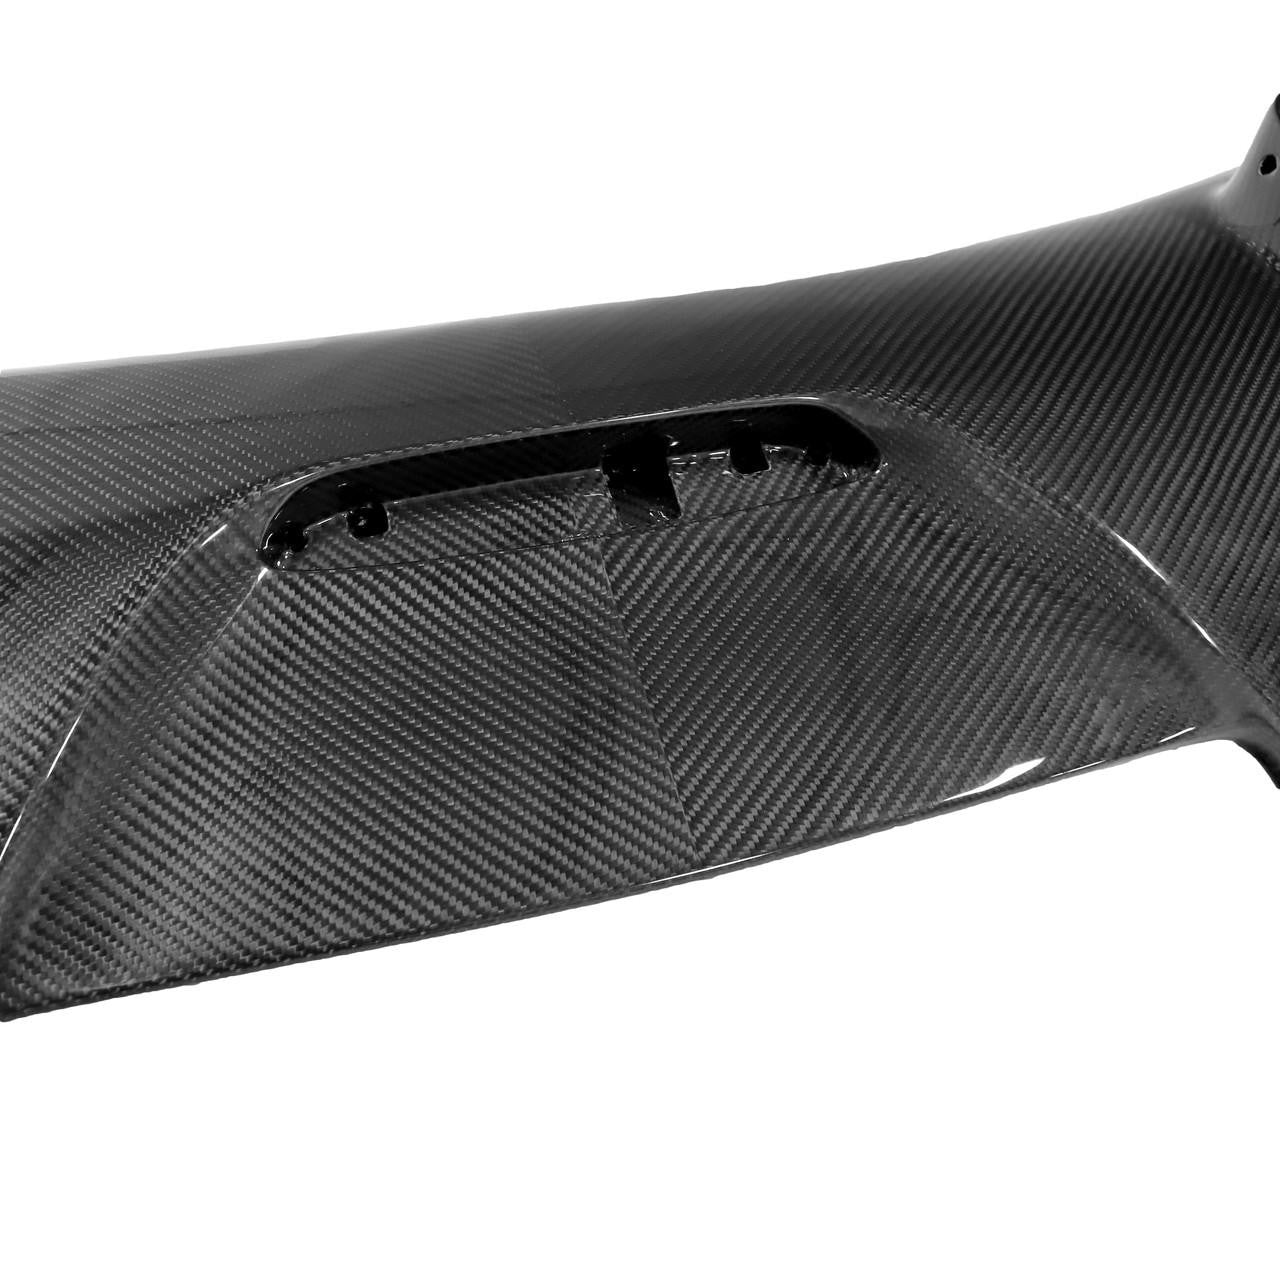 McLaren Carbon Fiber 765LT Style Spoiler For 720s